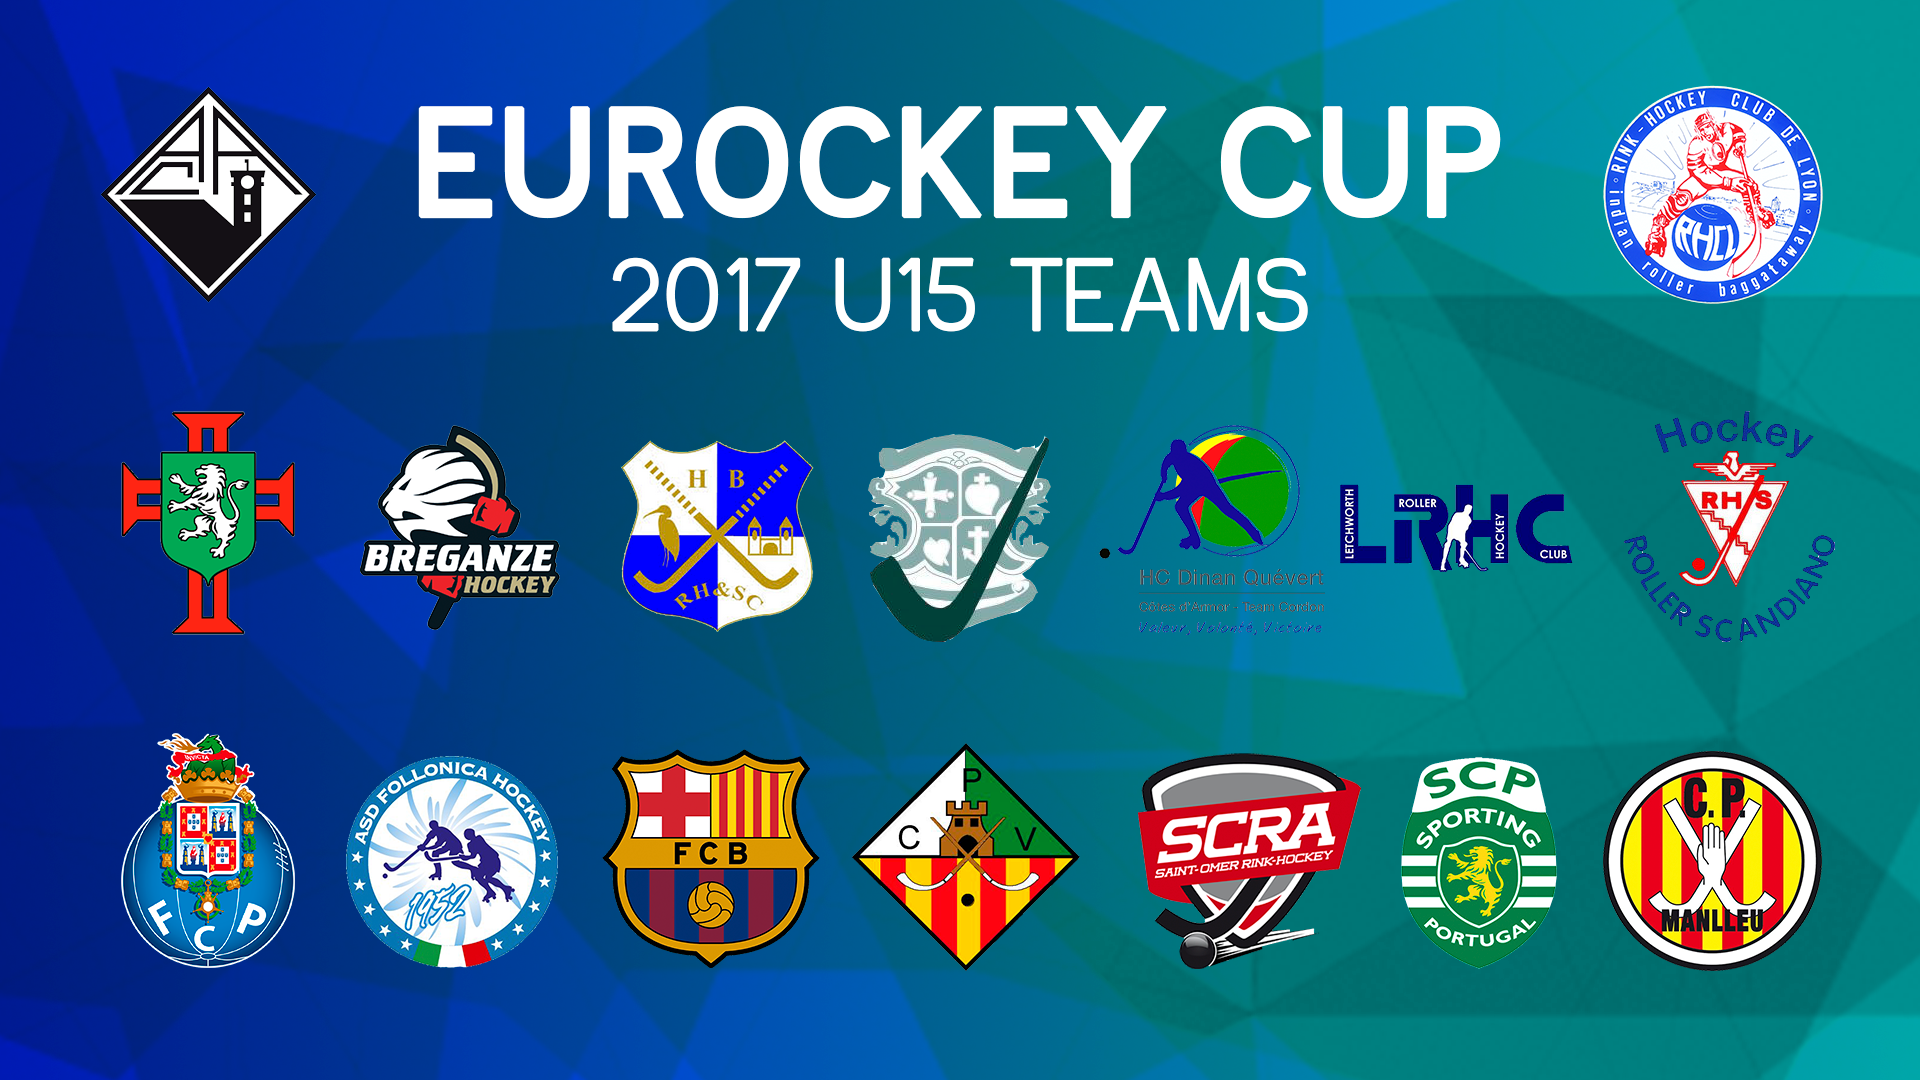 Eurockey Cup U-15 2017 - clubes participantes.png